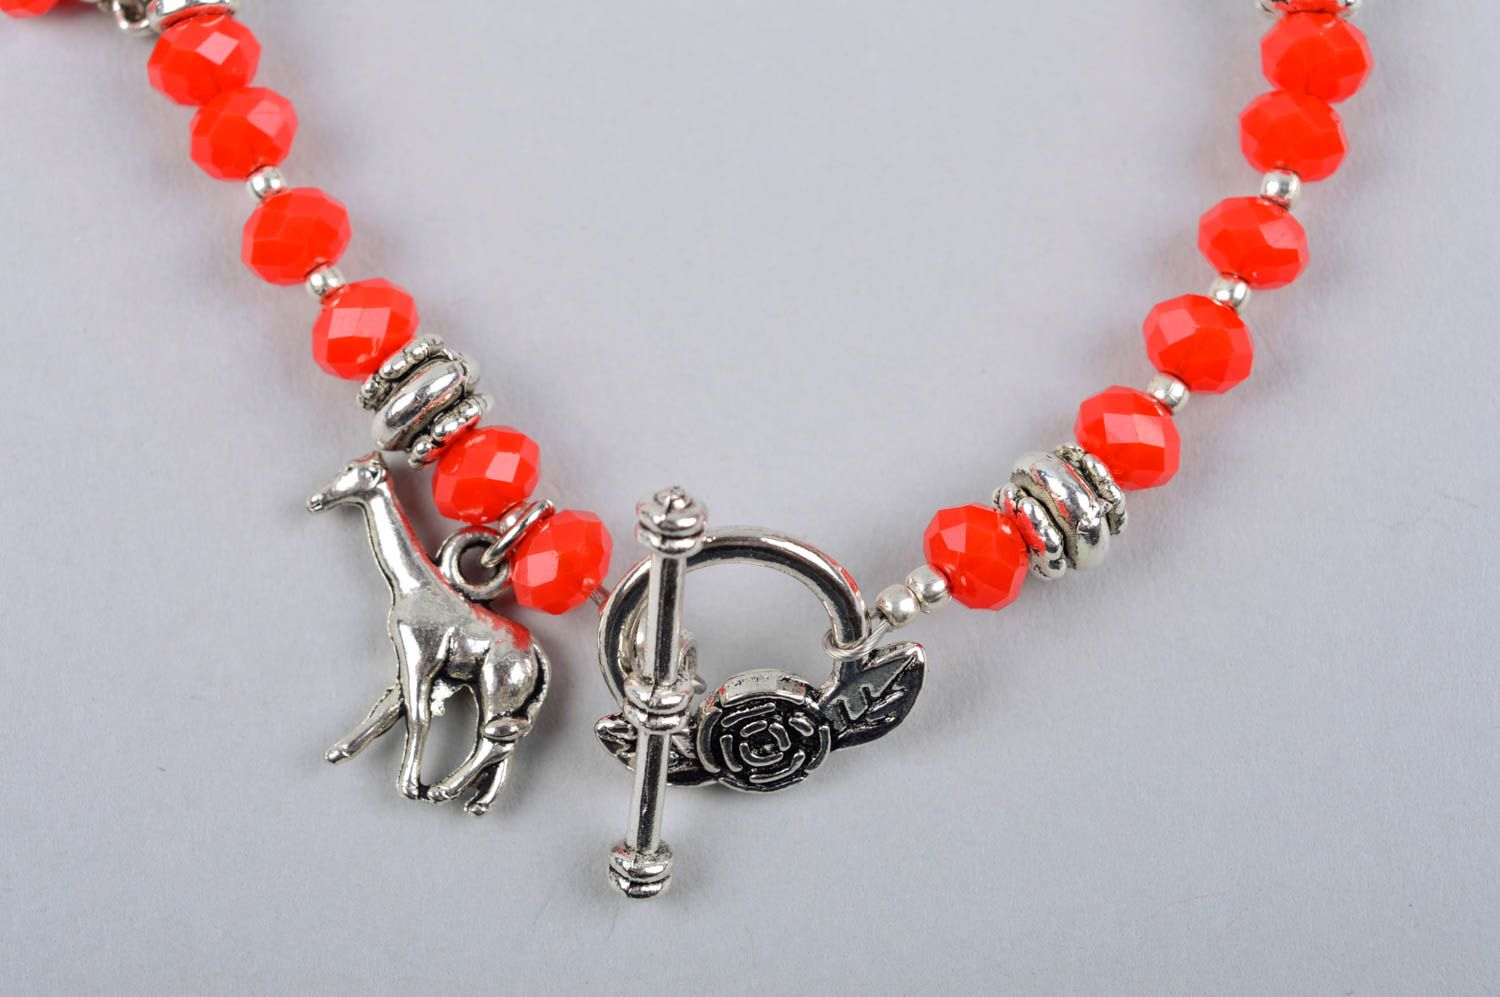 Handmade red beads bracelet with metal giraffe charm photo 5